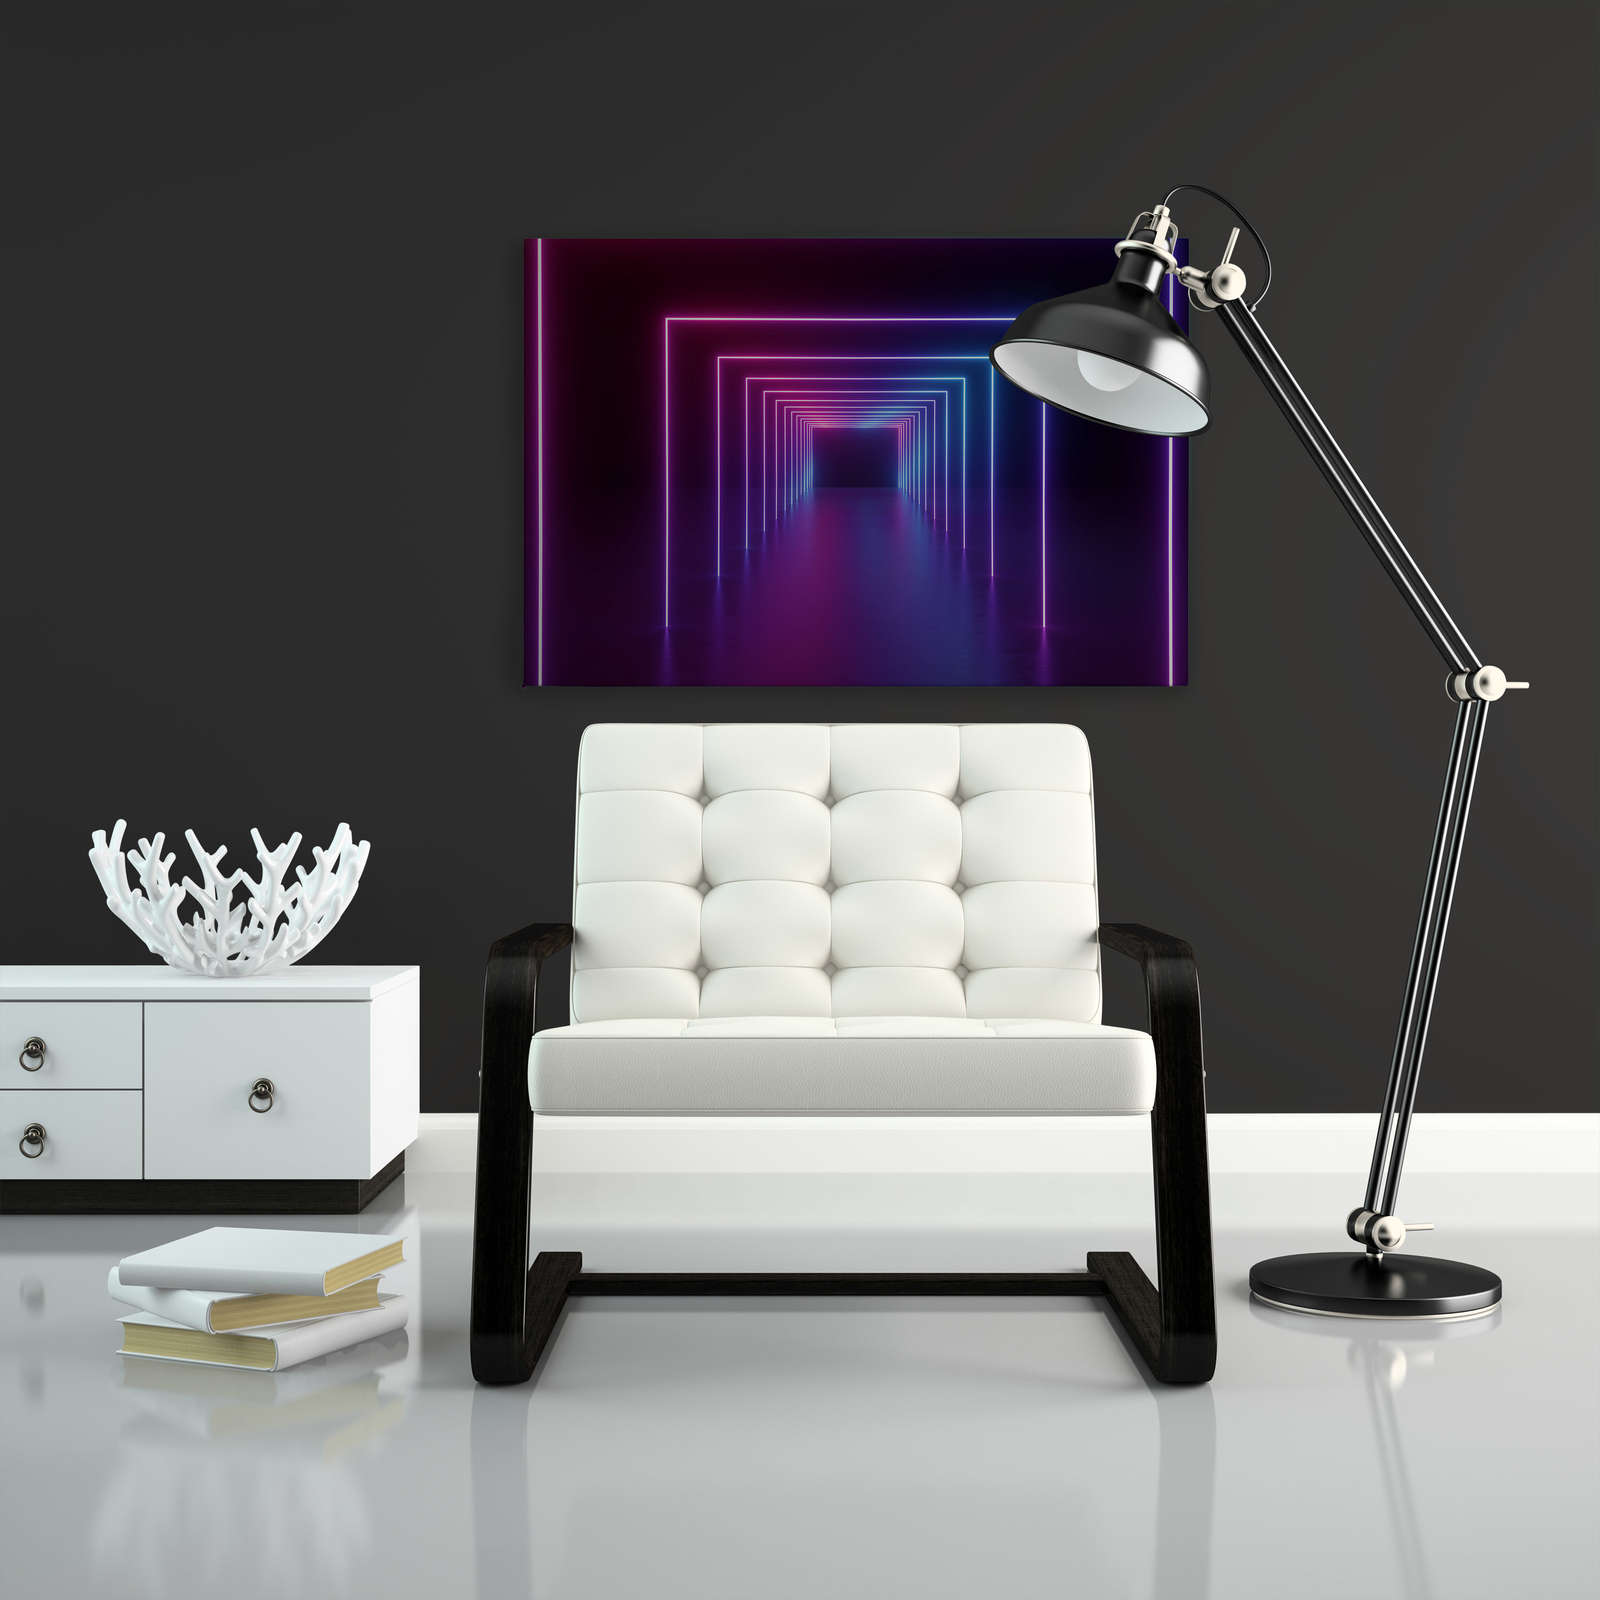             Leinwandbild Raum mit langem Gang LED Farben – 0,90 m x 0,60 m
        